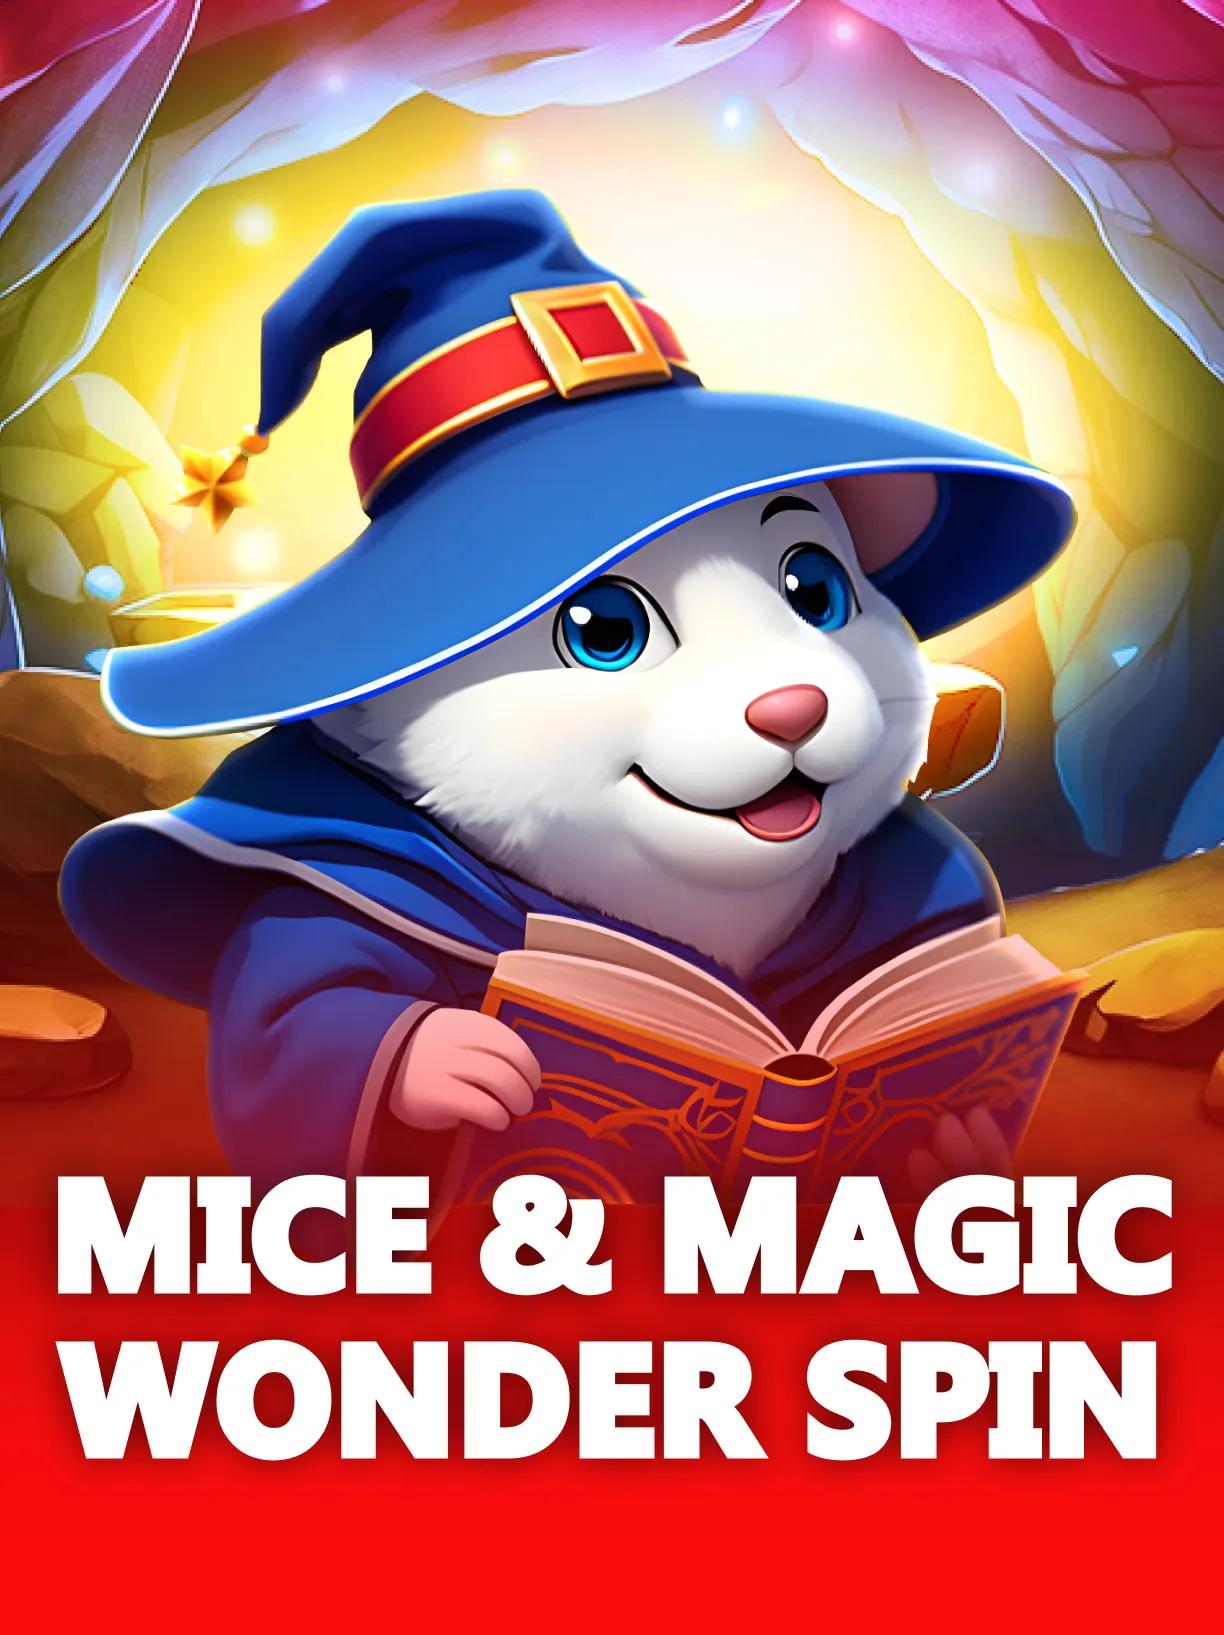 Mice_&_Magic_Wonder_Spin_square.webp